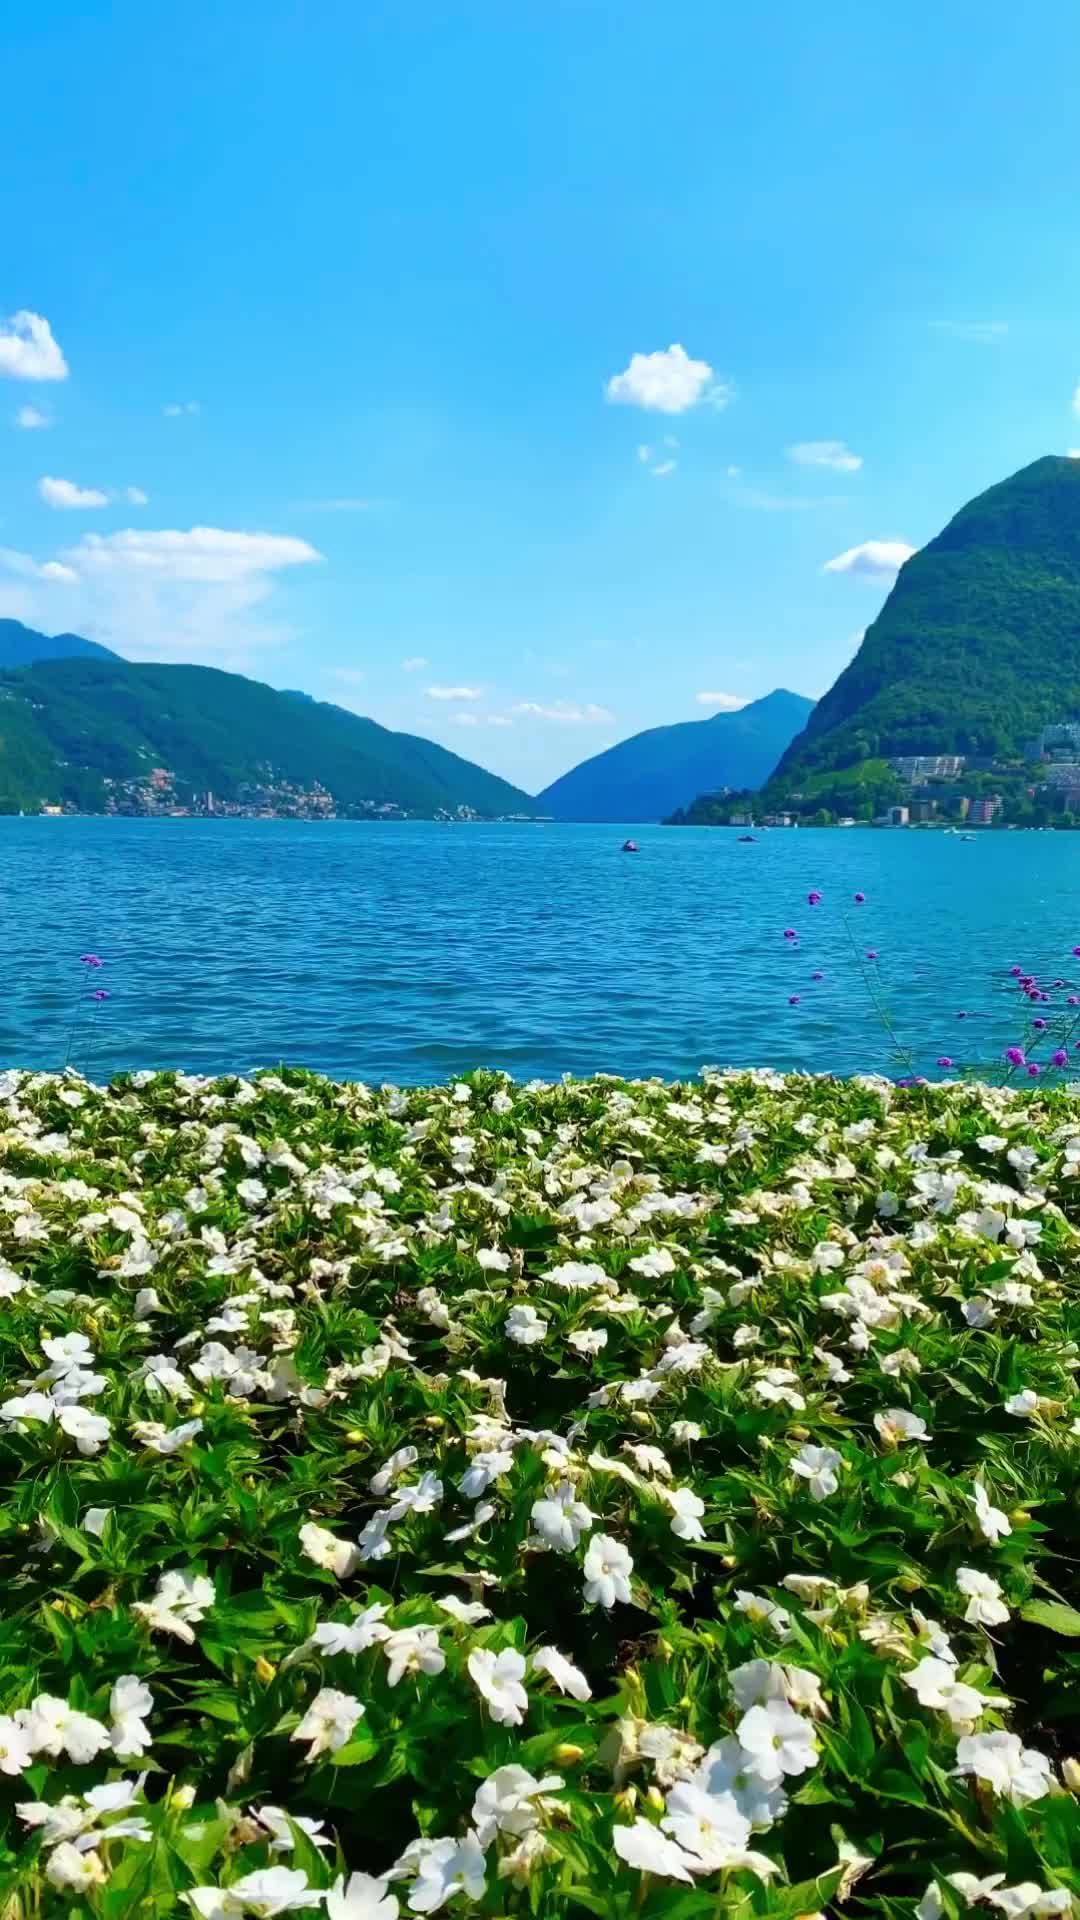 Best Photo Spots in Lugano, Switzerland